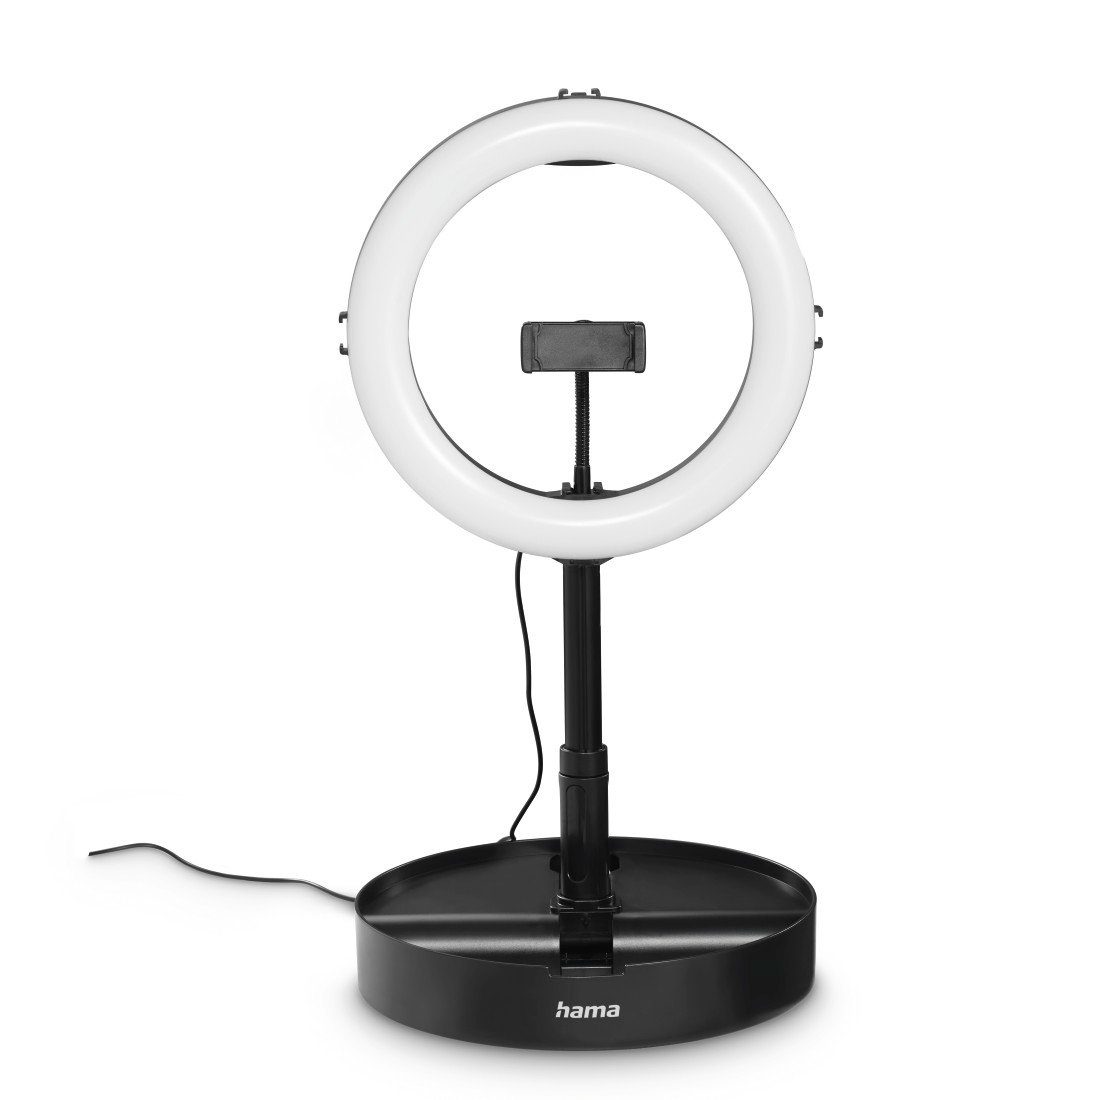 Hama Ringlicht LED Ringleuchte Mikrofon, Webcam, Stativ für mit Handy, Videokonferenz